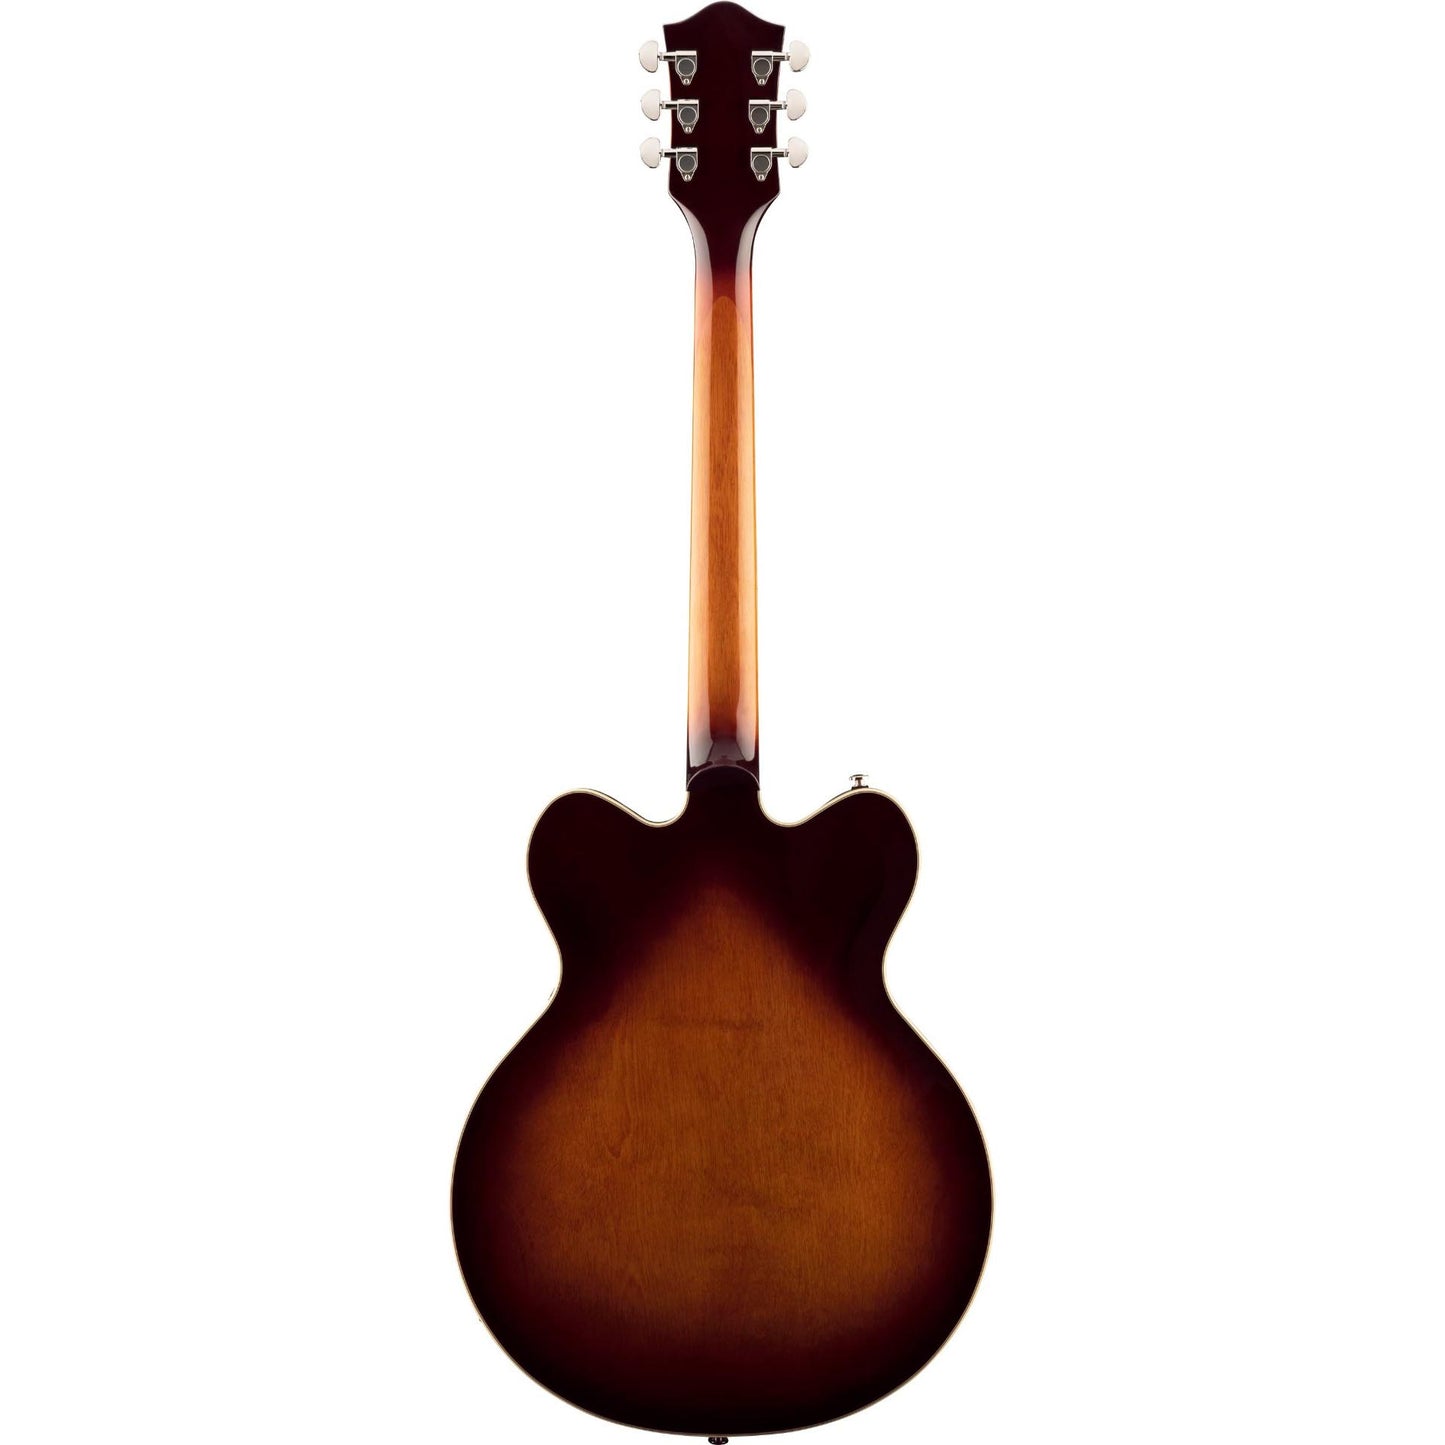 Gretsch G2622 Streamliner™ Center Block Semi Hollow Electric Guitar, Forge Glow Maple